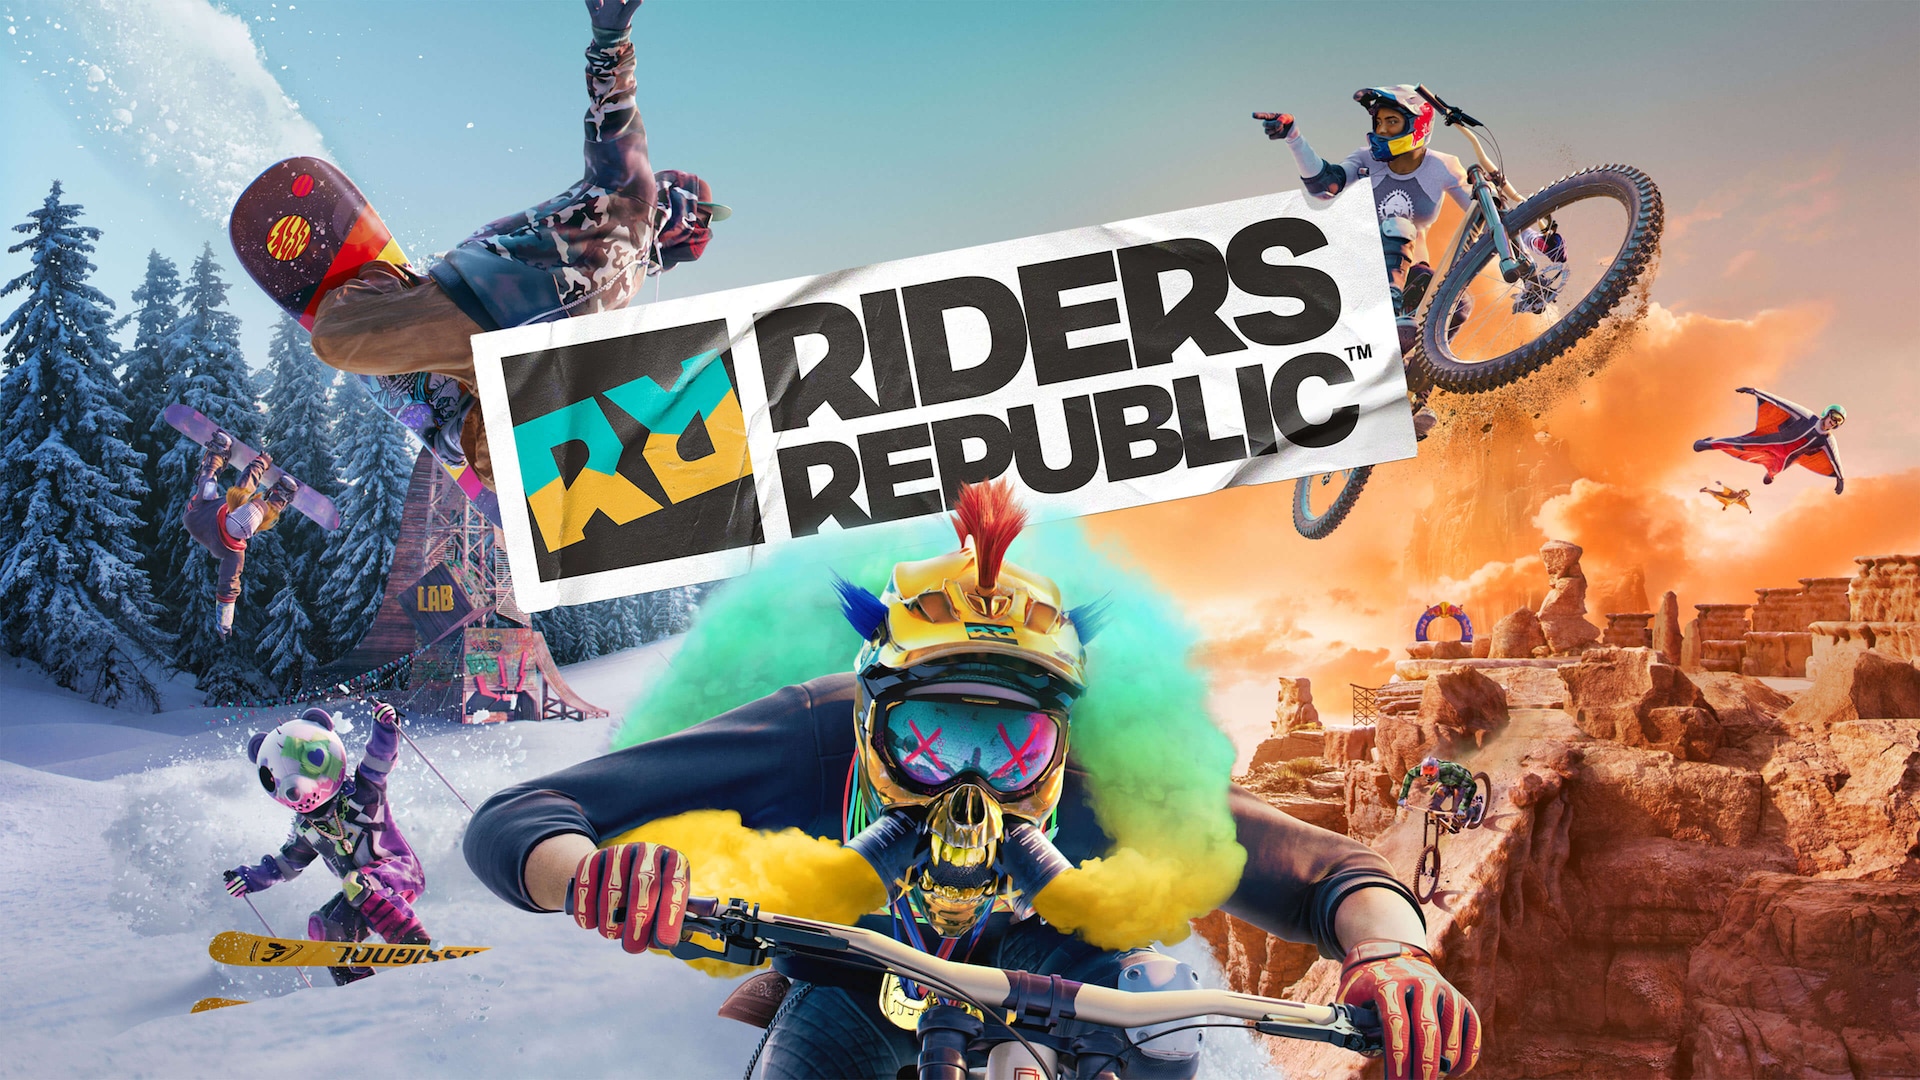 Riders Republic Game Wallpaper 73142 1920x1080px